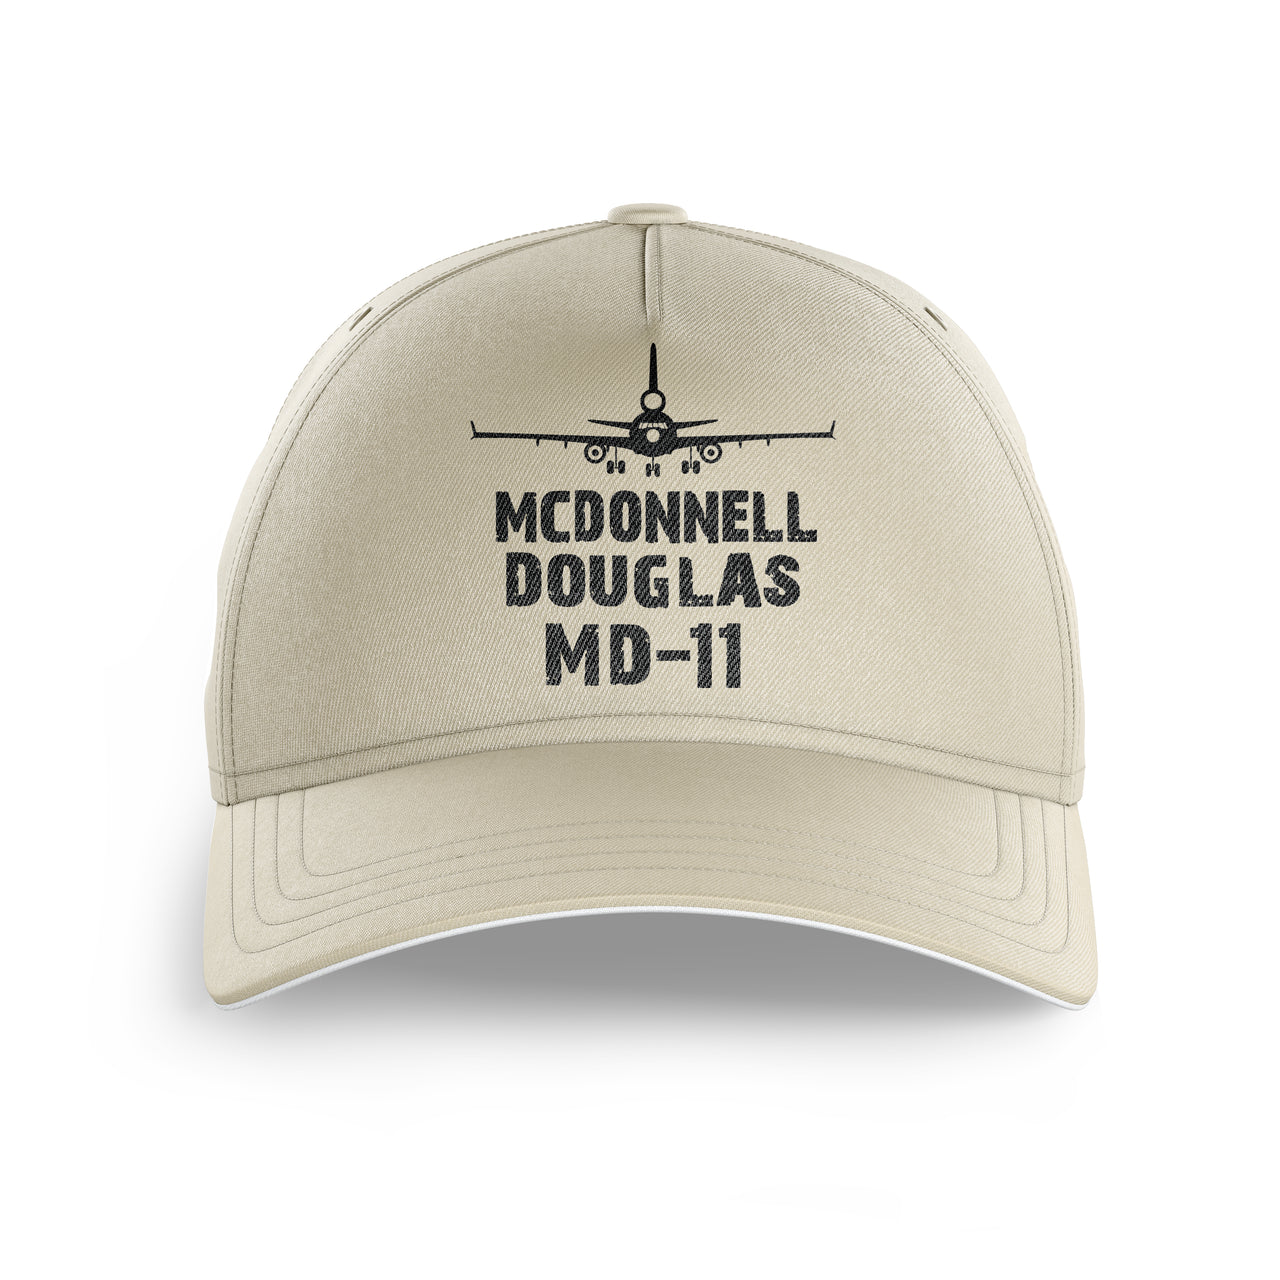 McDonnell Douglas MD-11 & Plane Printed Hats